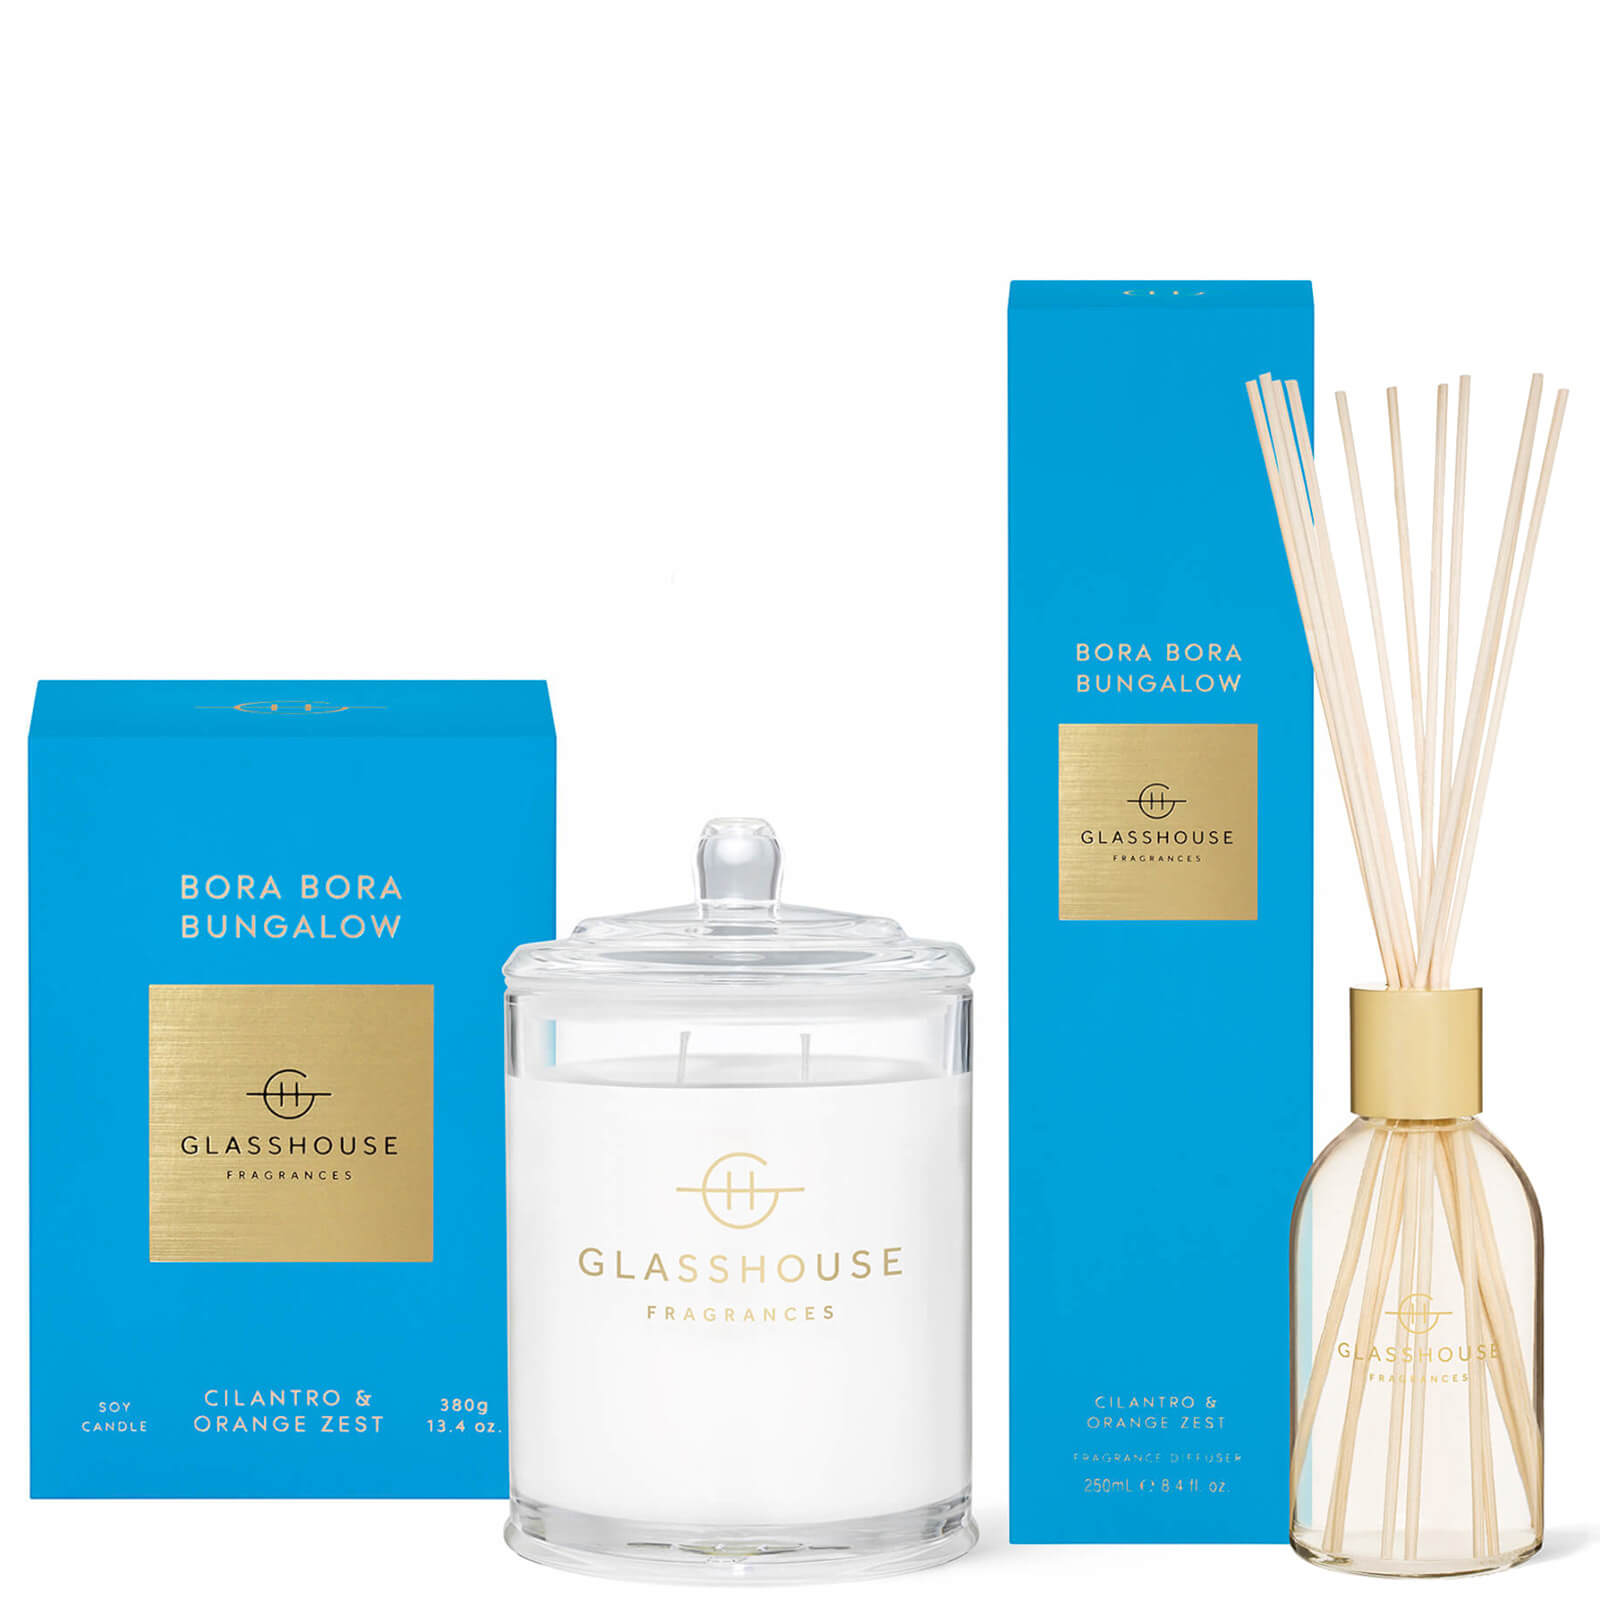 Glasshouse Fragrances Glasshouse Bora Bora Bungalow Candle and Liquid Diffuser